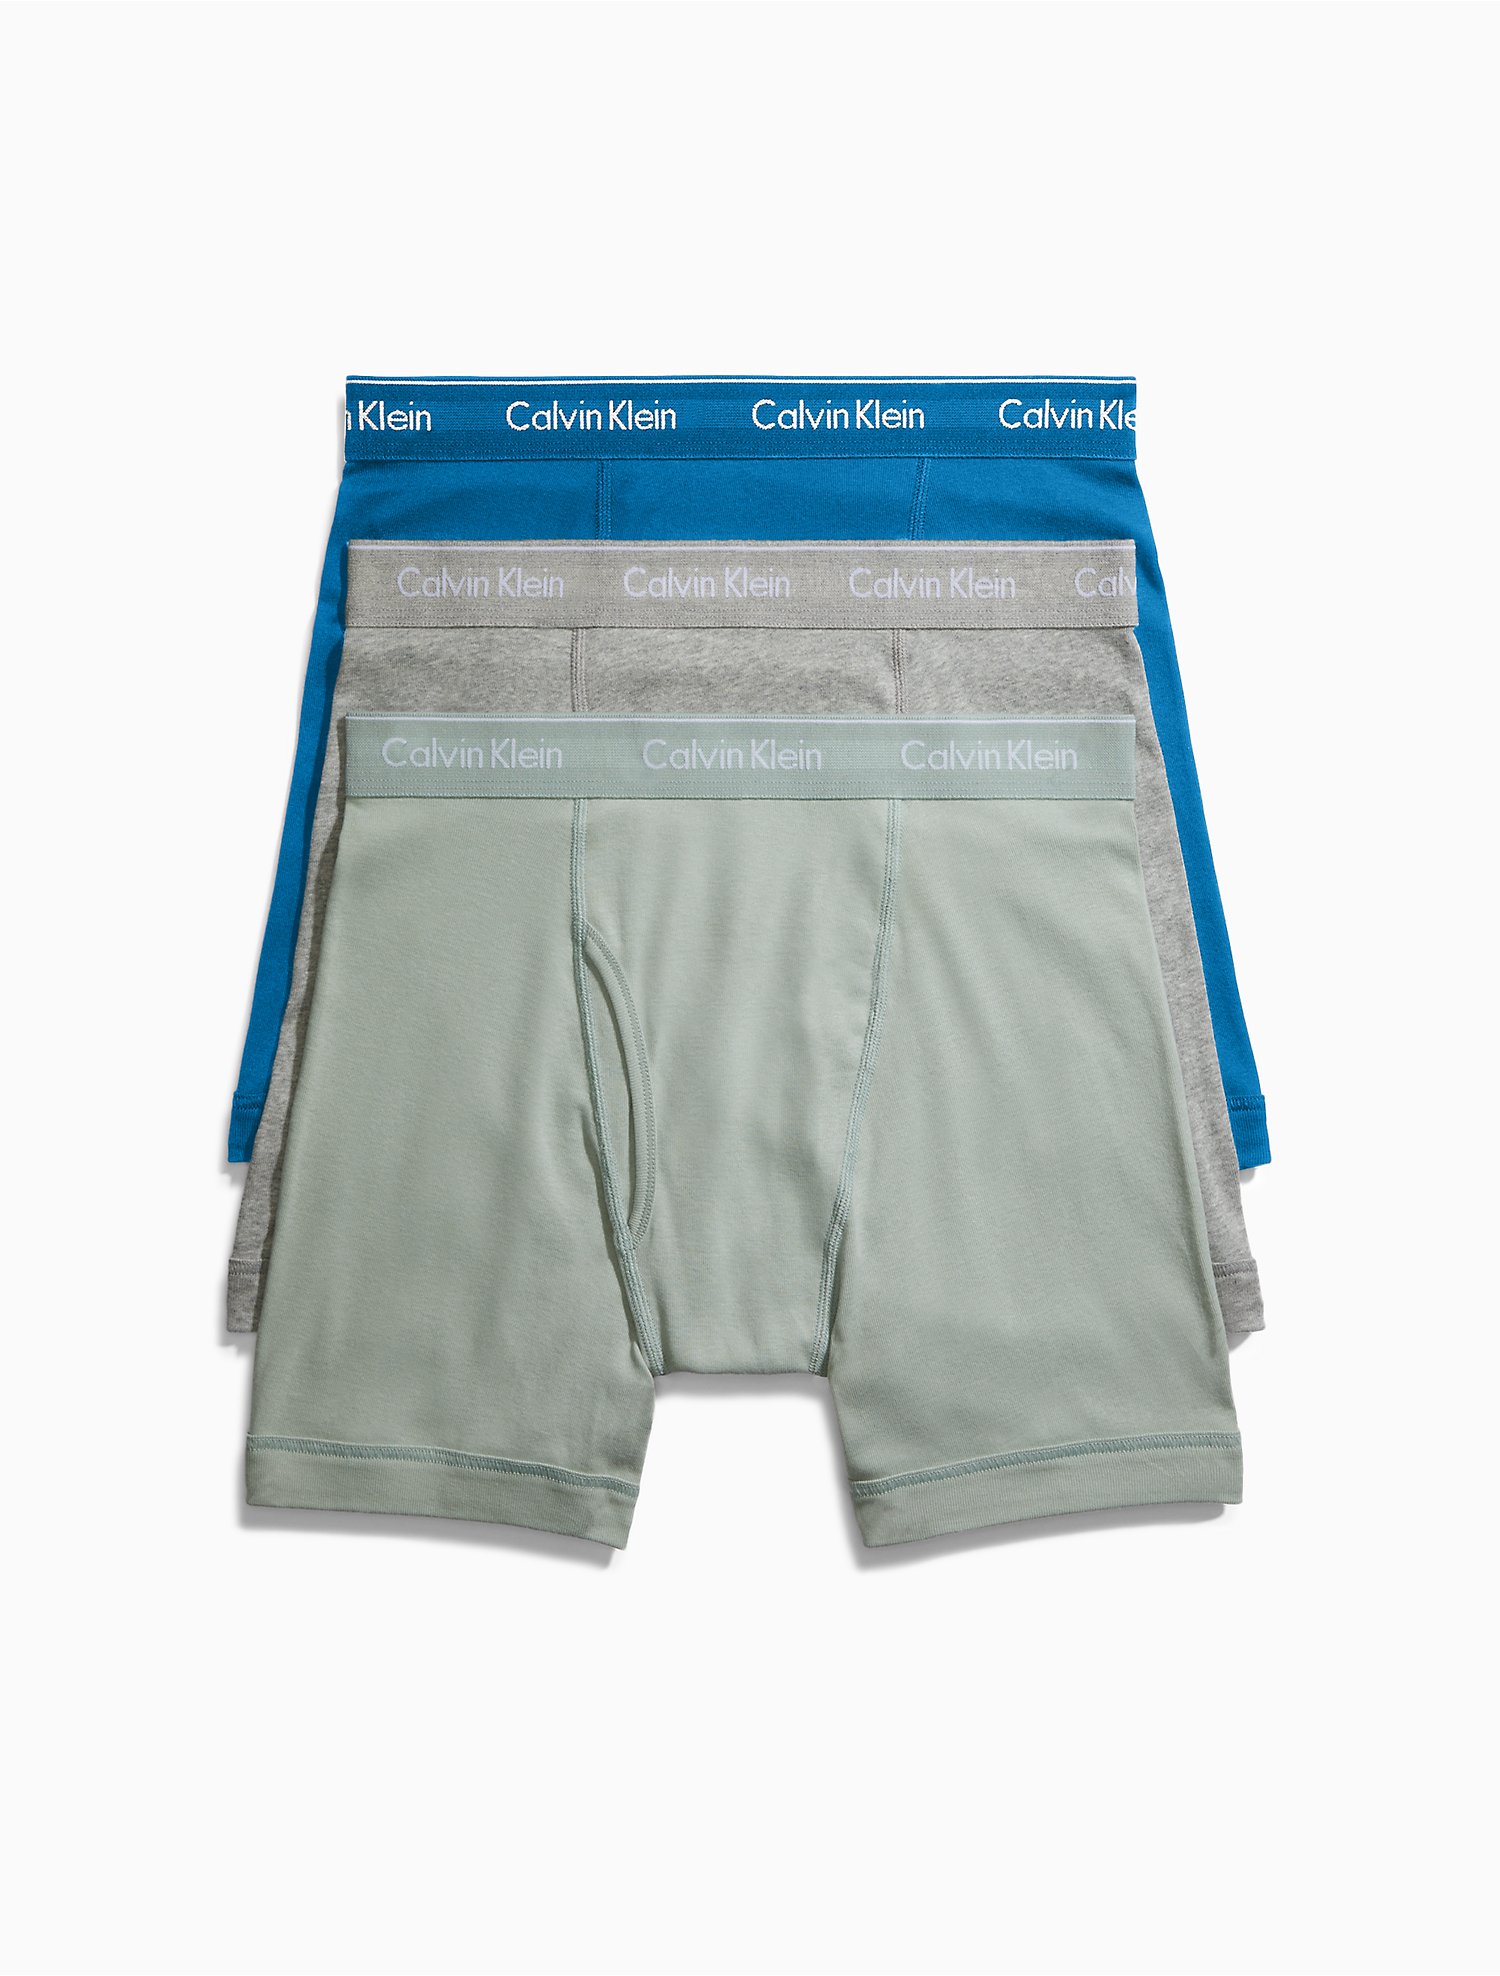 Cotton Classics 3-Pack Boxer Brief | Calvin Klein